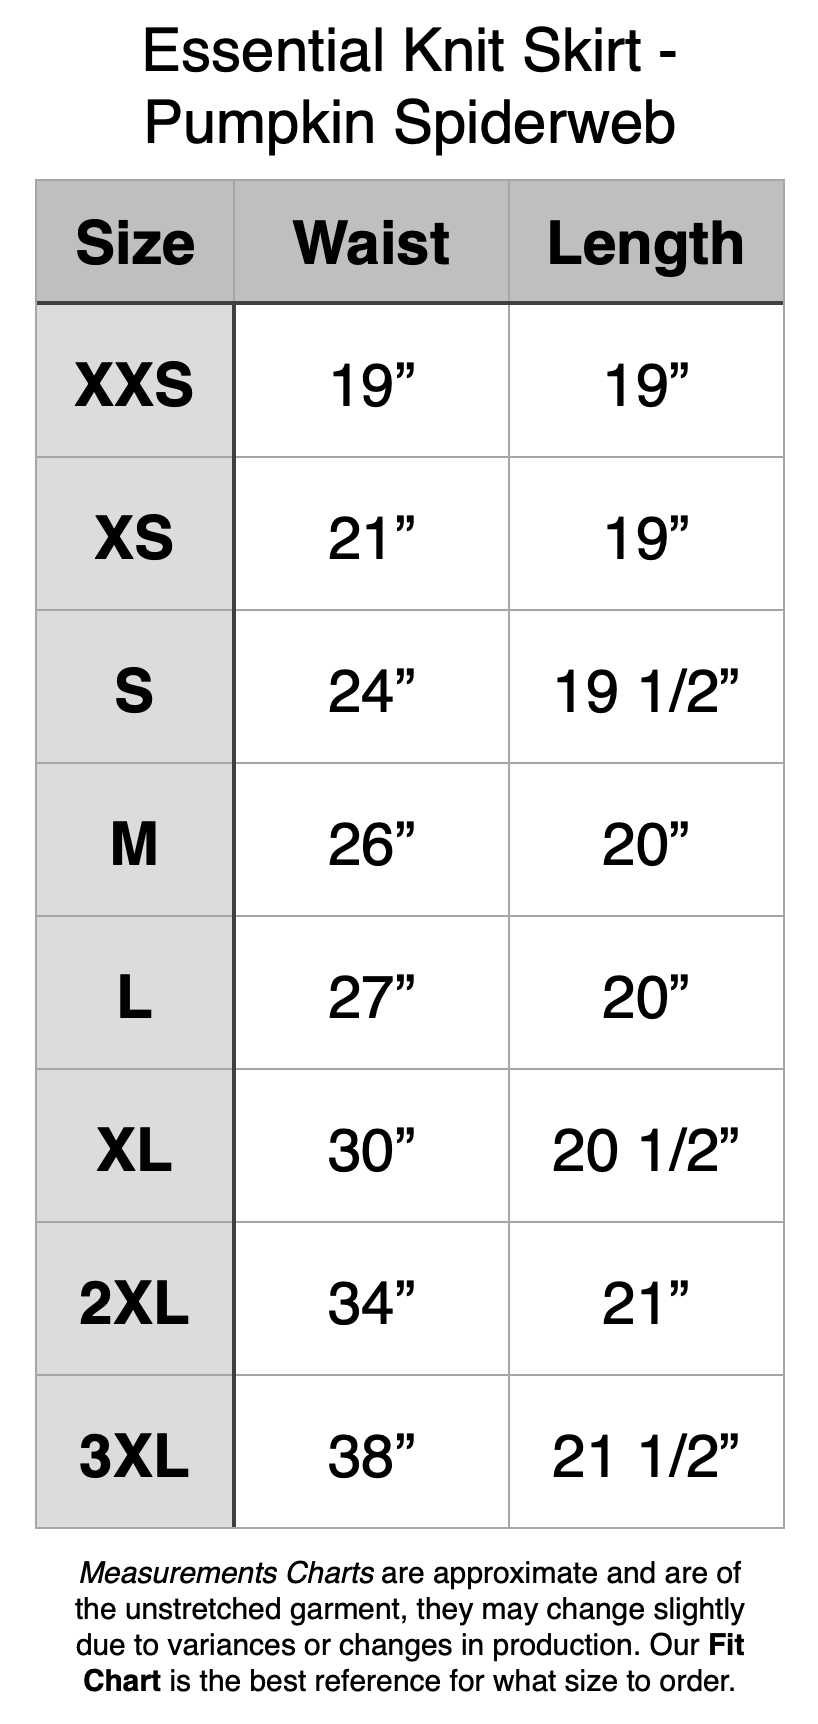 Essential Knit Skirt - Pumpkin Spiderweb: XXS - 19" Waist, 19" Length. XS - 21" Waist, 19" Length. S - 24" Waist, 19.5" Length. M - 26" Waist, 20" Length. L - 27" Waist, 20" Length. XL - 30" Waist, 20.5" Length. 2XL - 34" Waist, 21" Length. 3XL - 38" Waist, 21.5" Length.